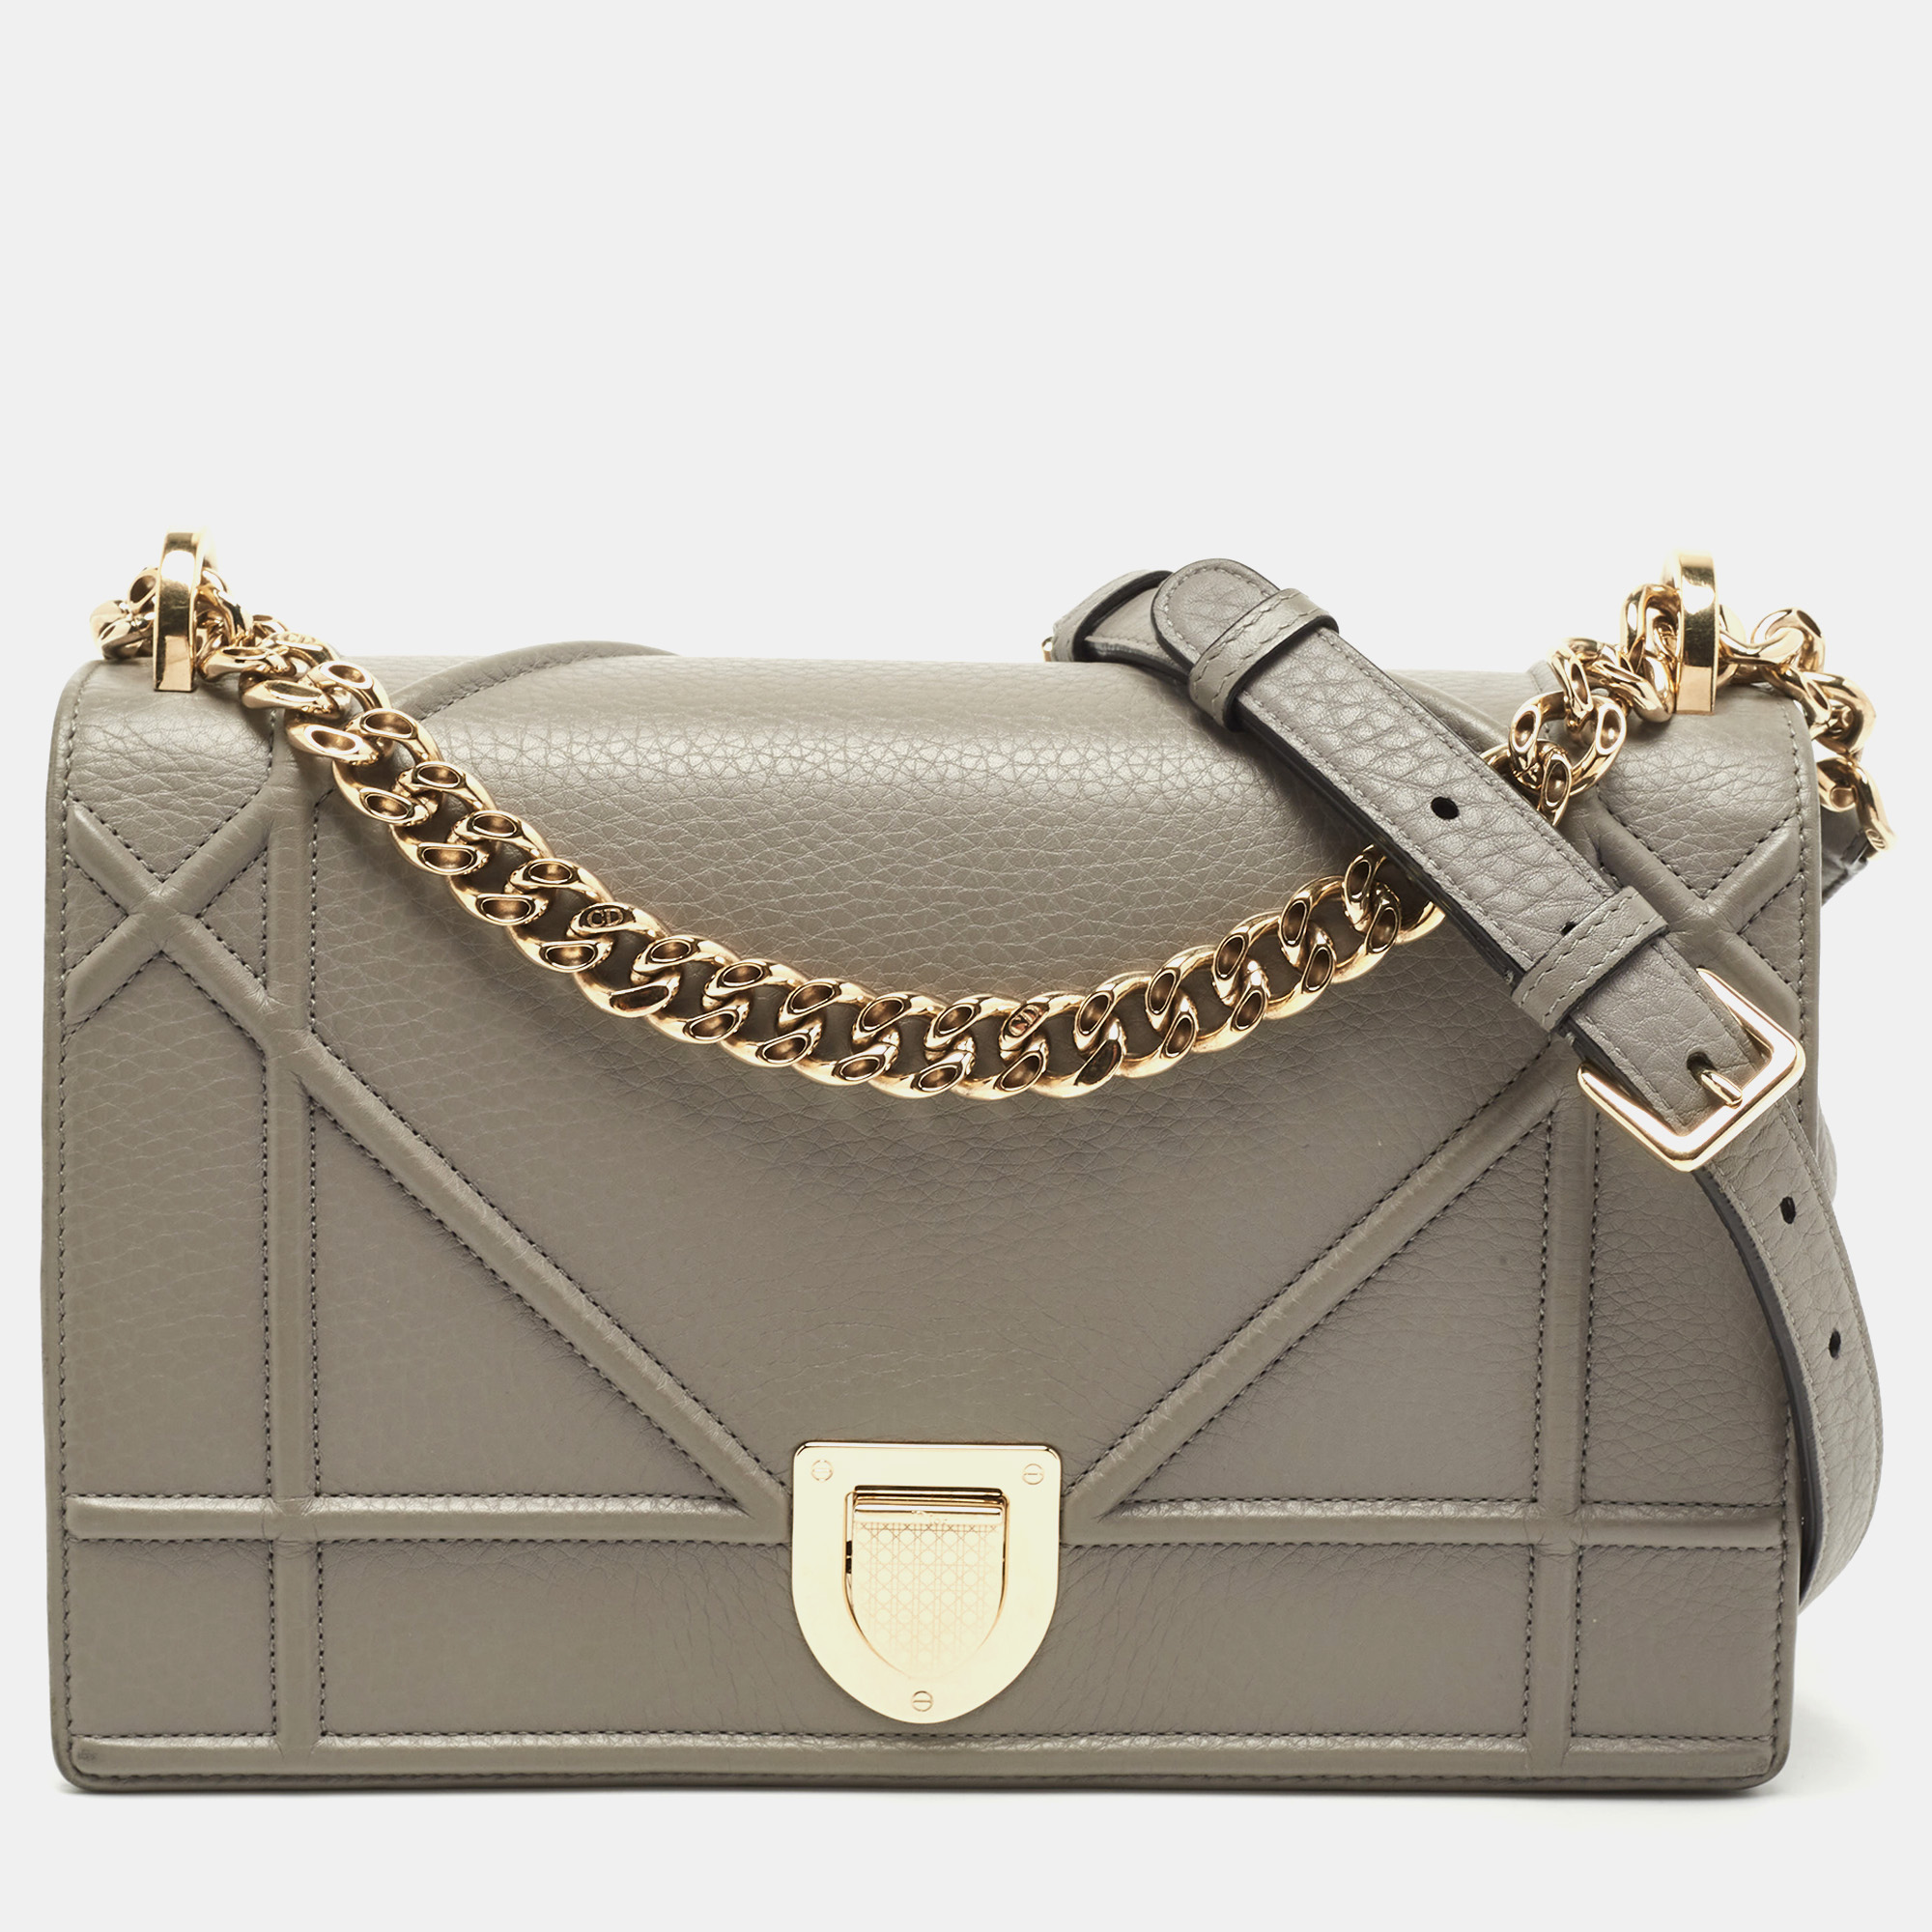 Dior Grey Leather Medium Diorama Shoulder Bag